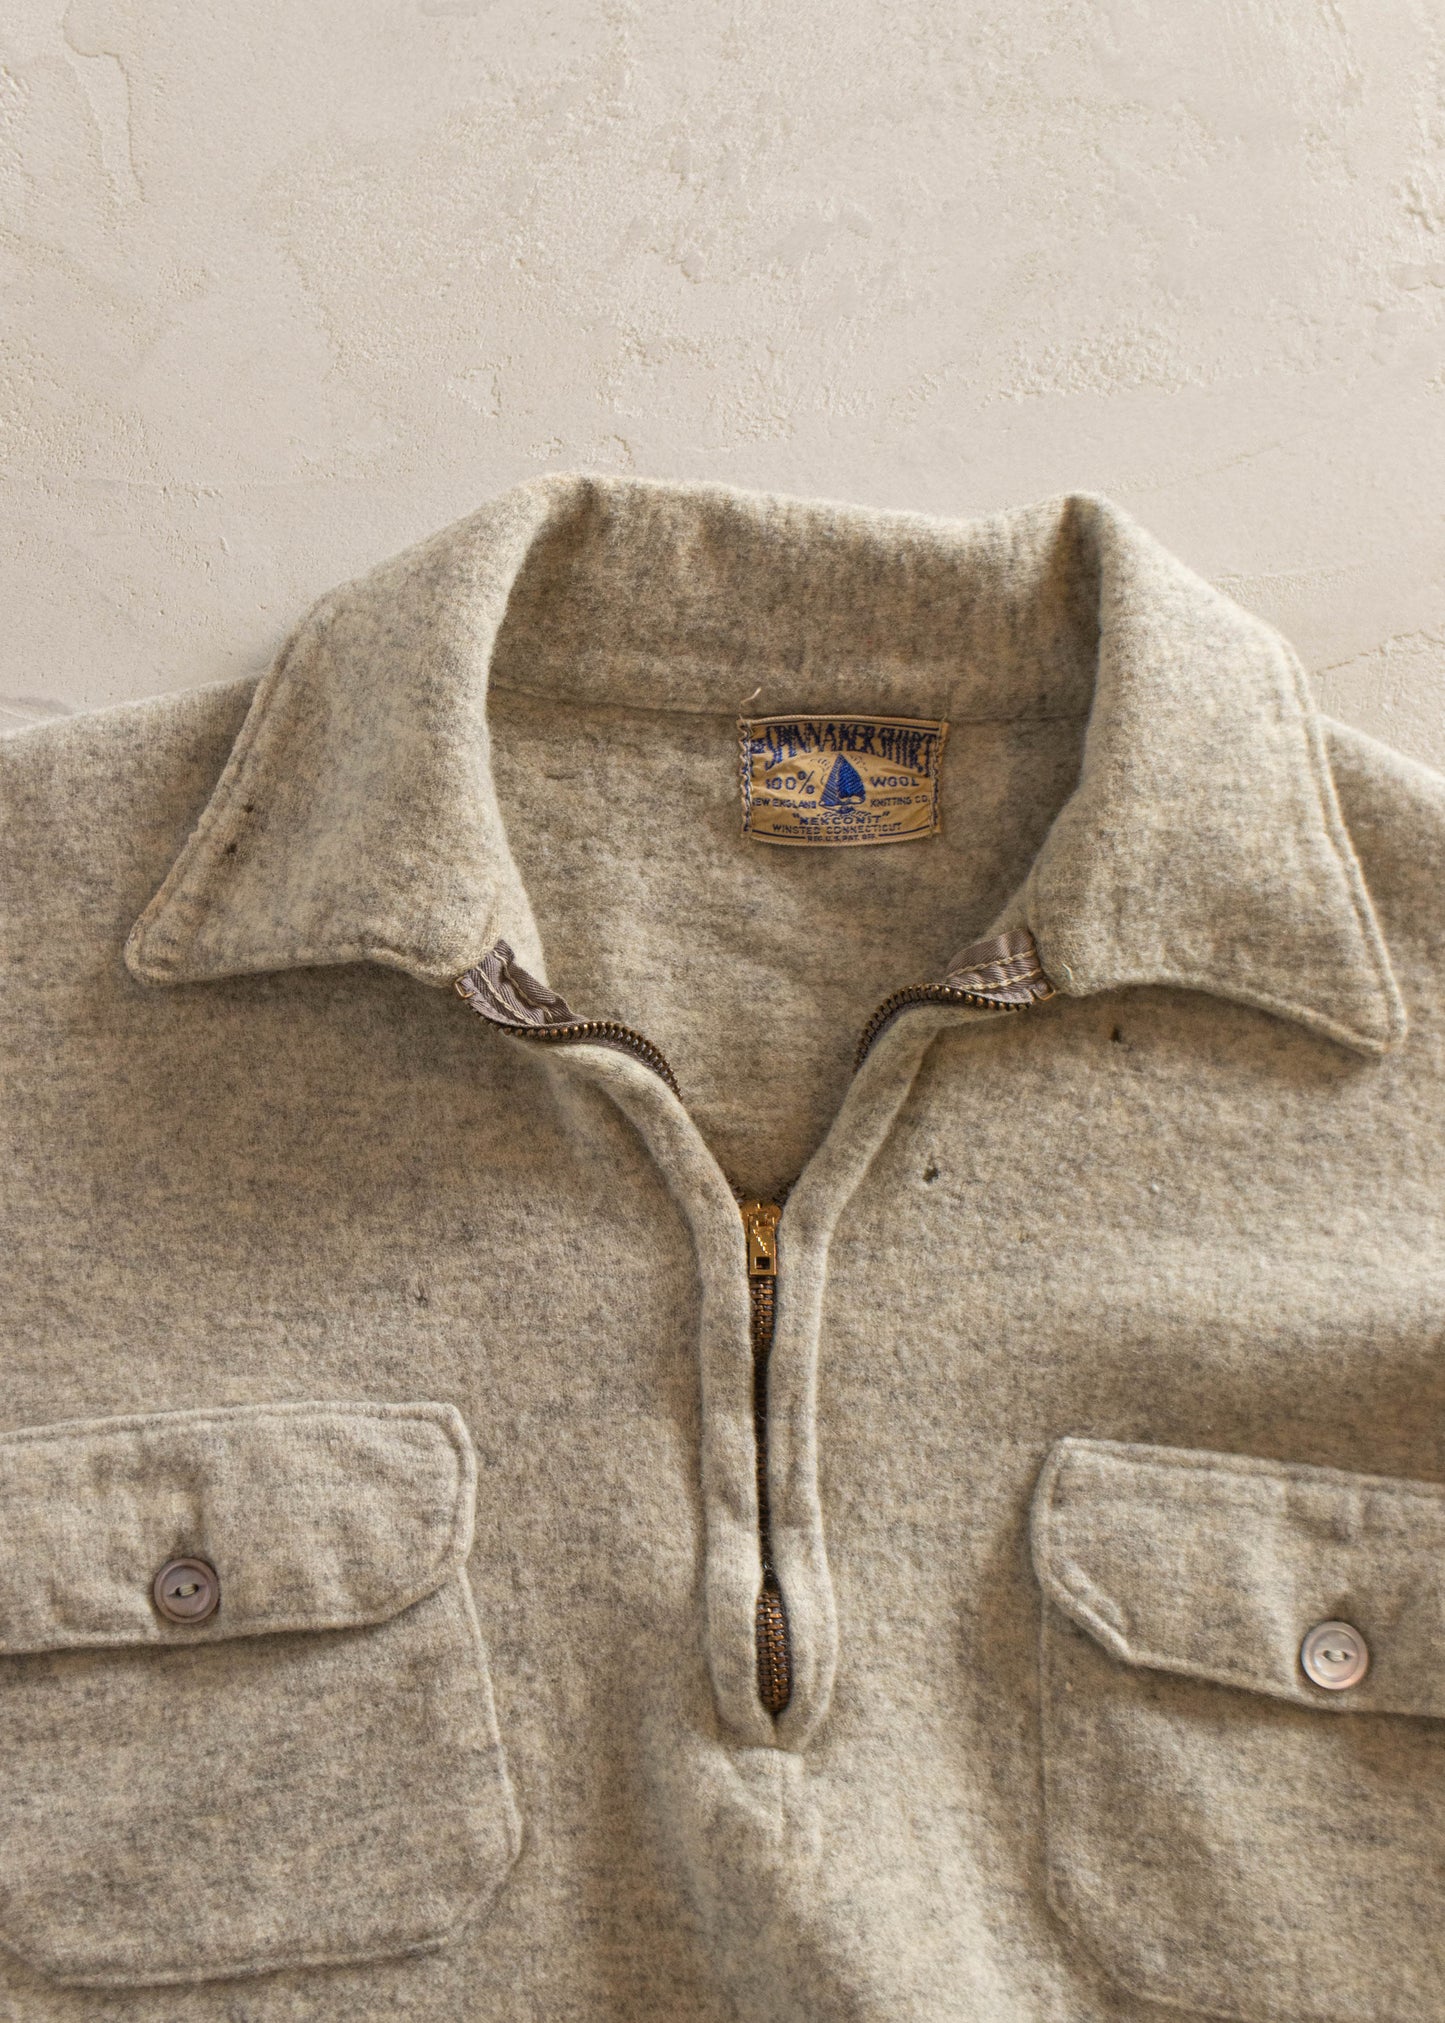 1940s Spinnaker Shirt Half Zip Wool Sweater Size M/L